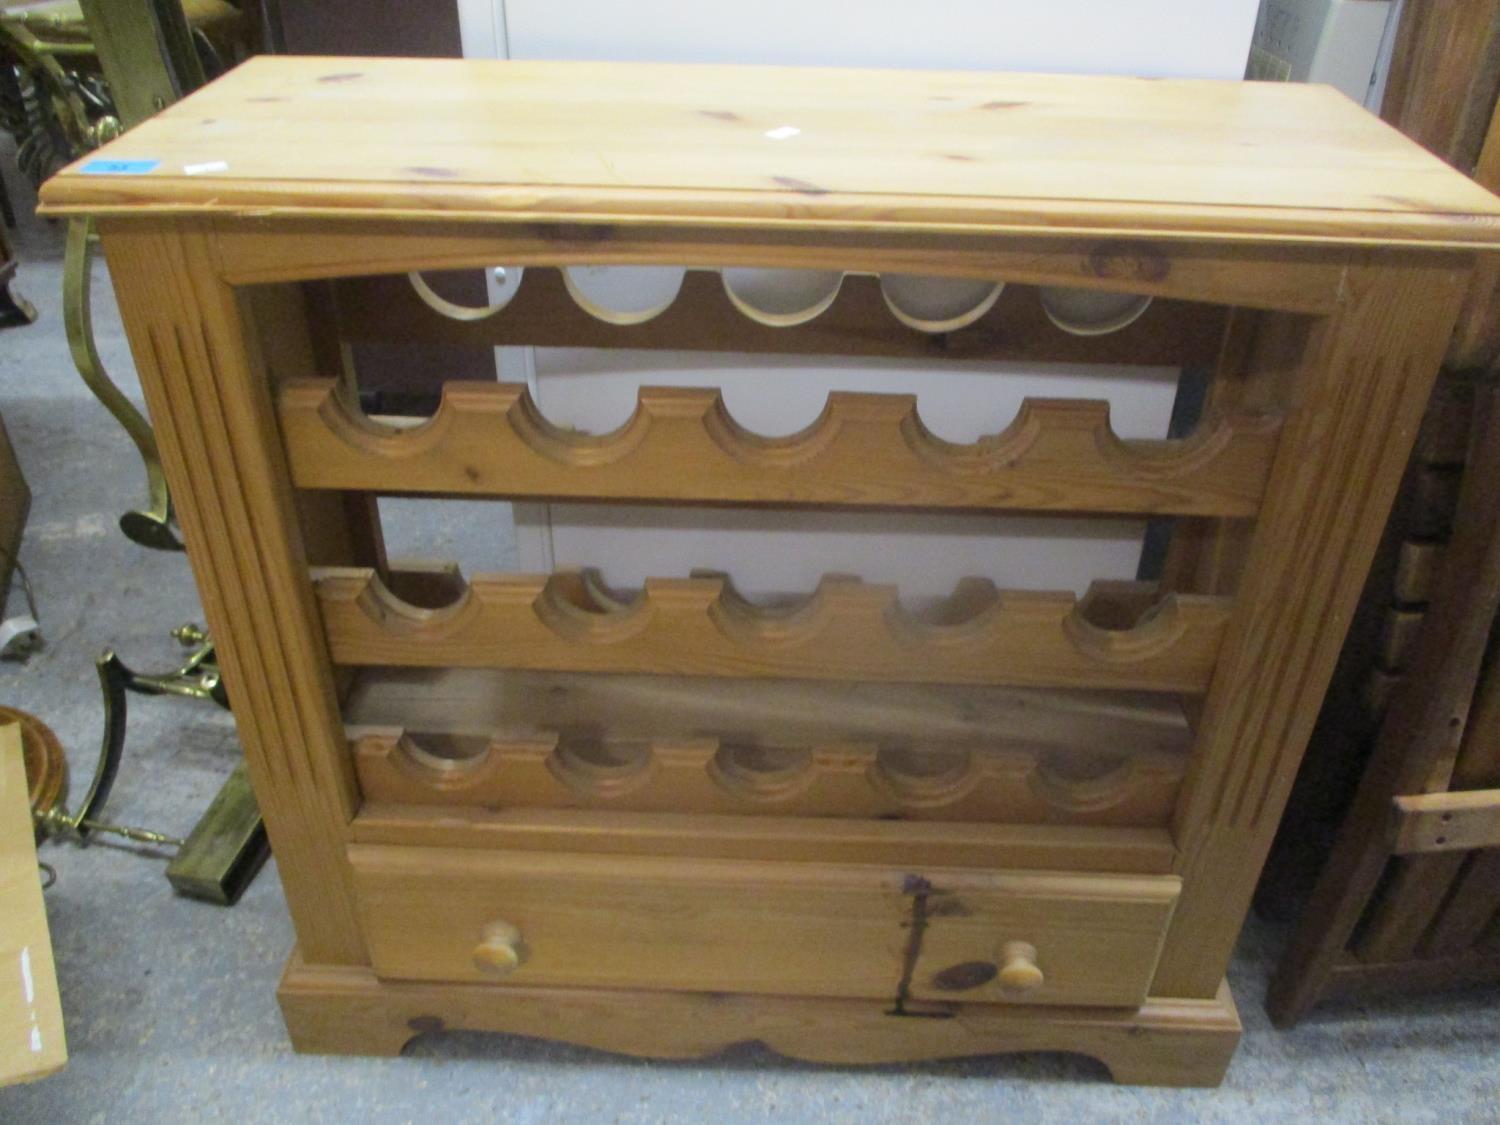 A modern pine wire rack with single drawer below, 30 1/4" h x 31 1/4"w